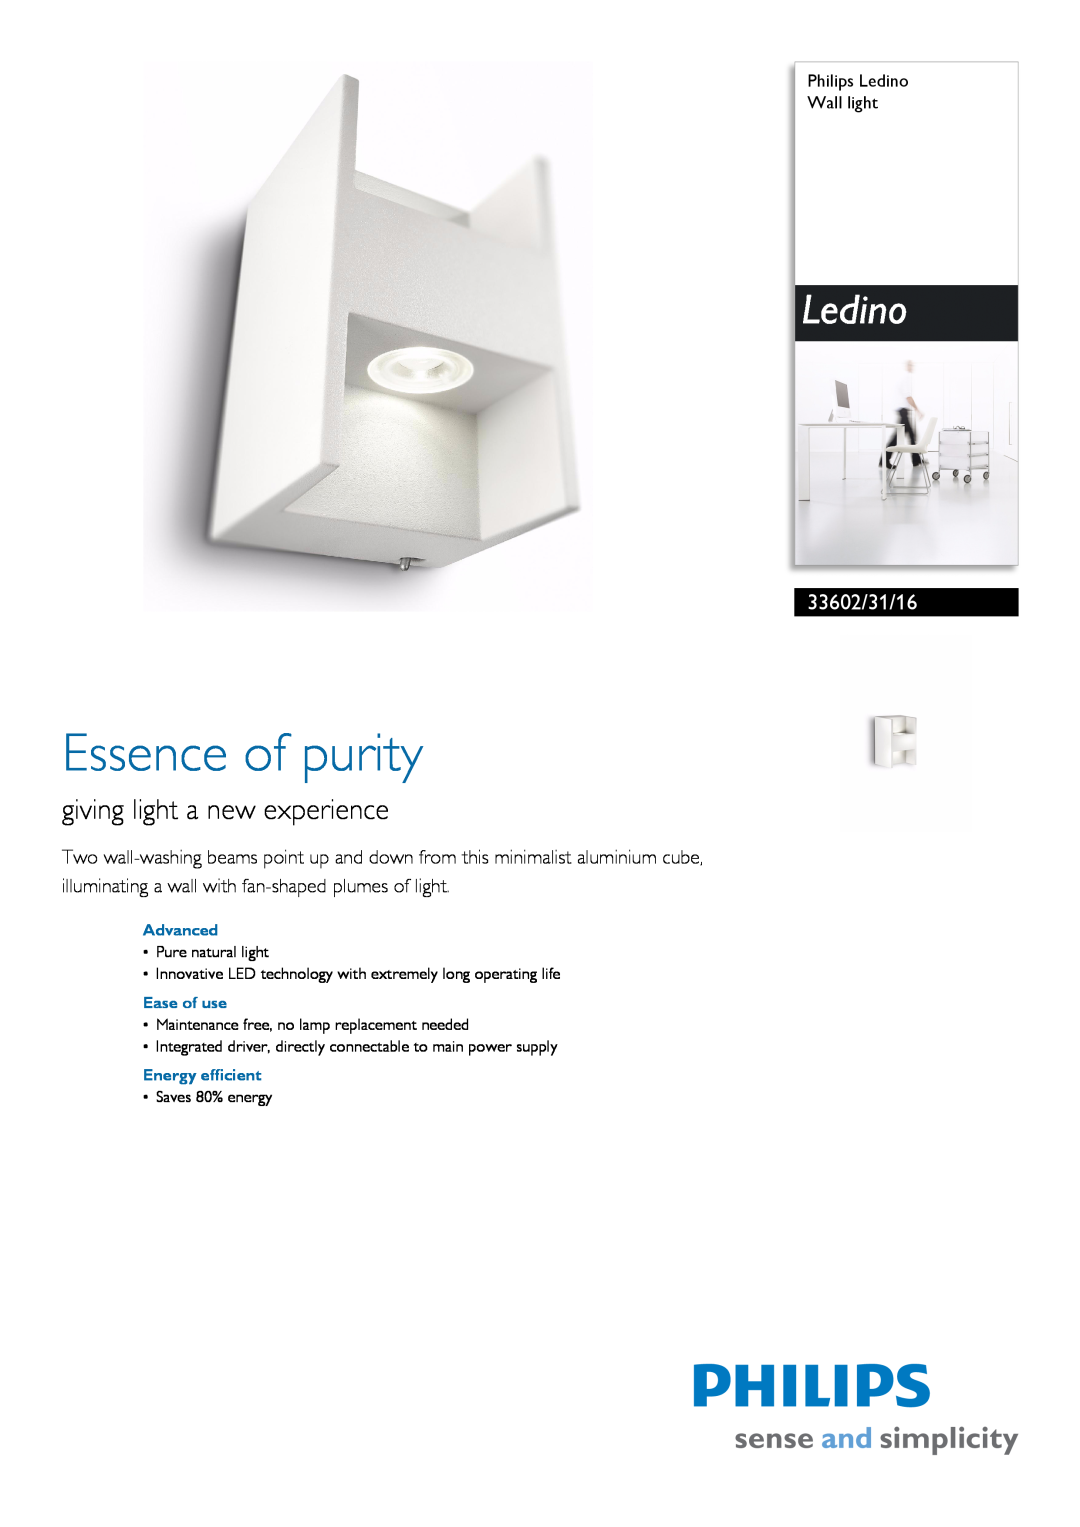 Philips 33602/31/16 manual Philips Ledino Wall light, Advanced, Ease of use, Energy efficient, Essence of purity 